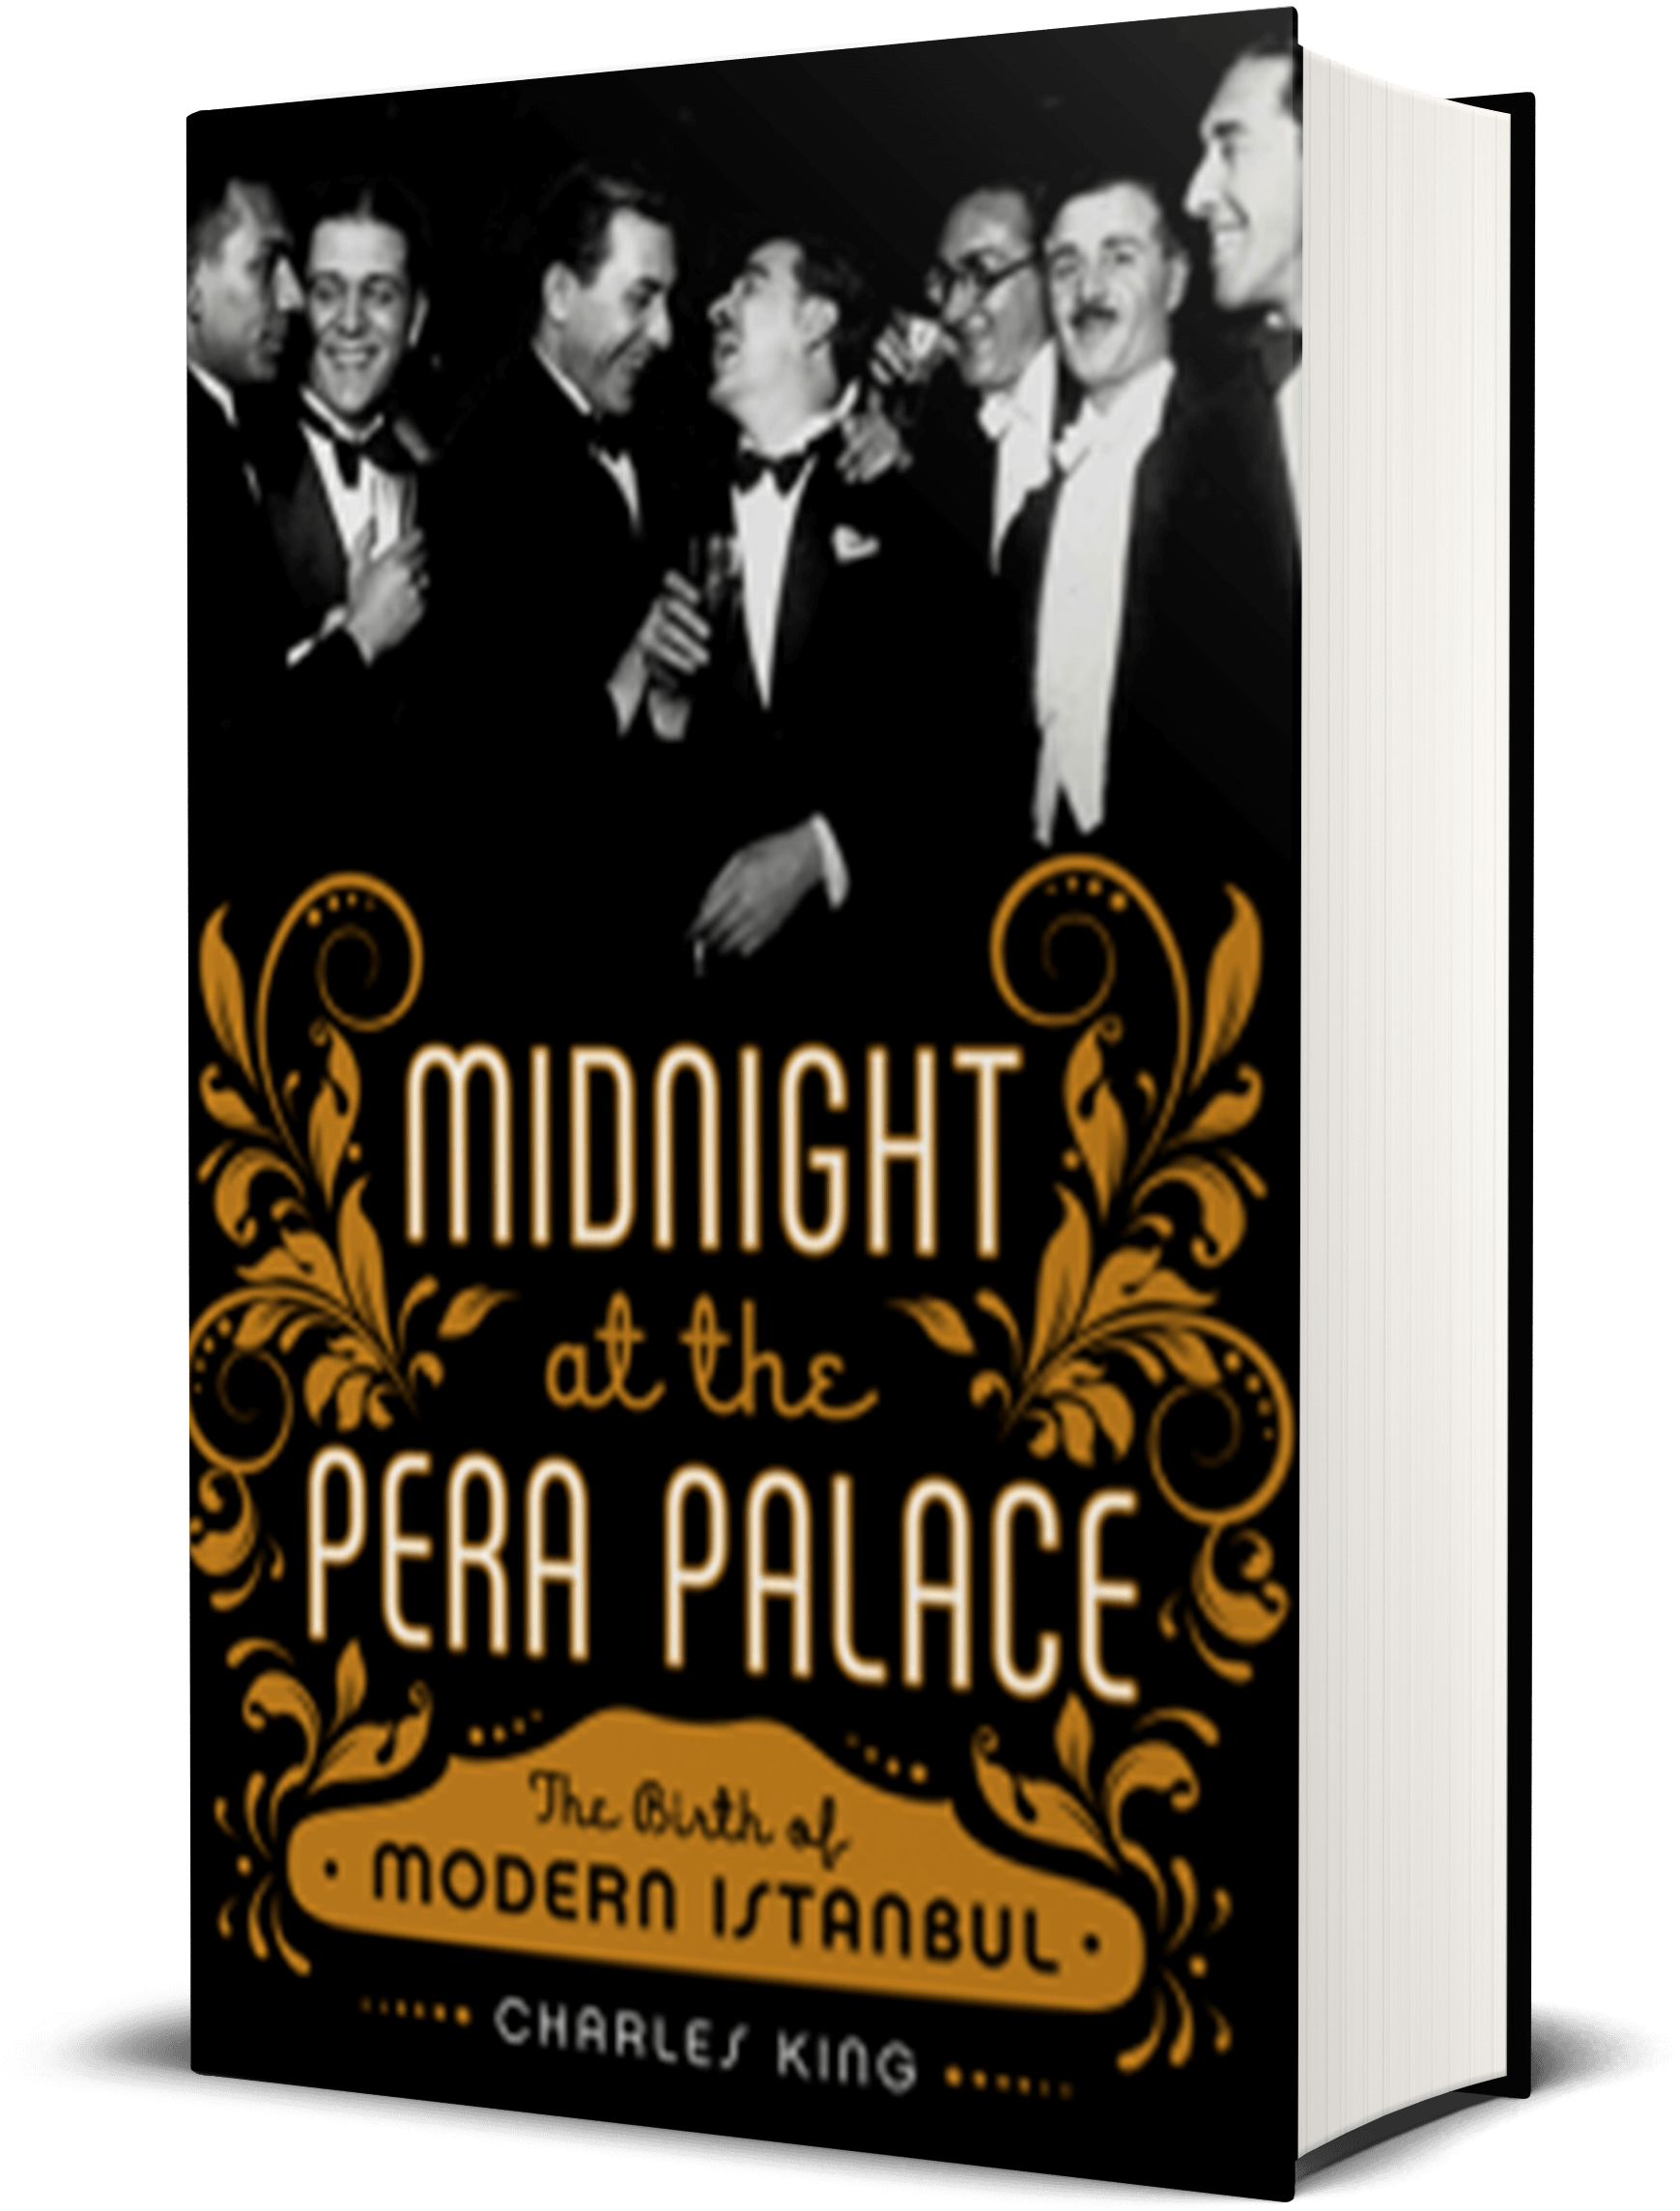 The palace pera at midnight Midnight at